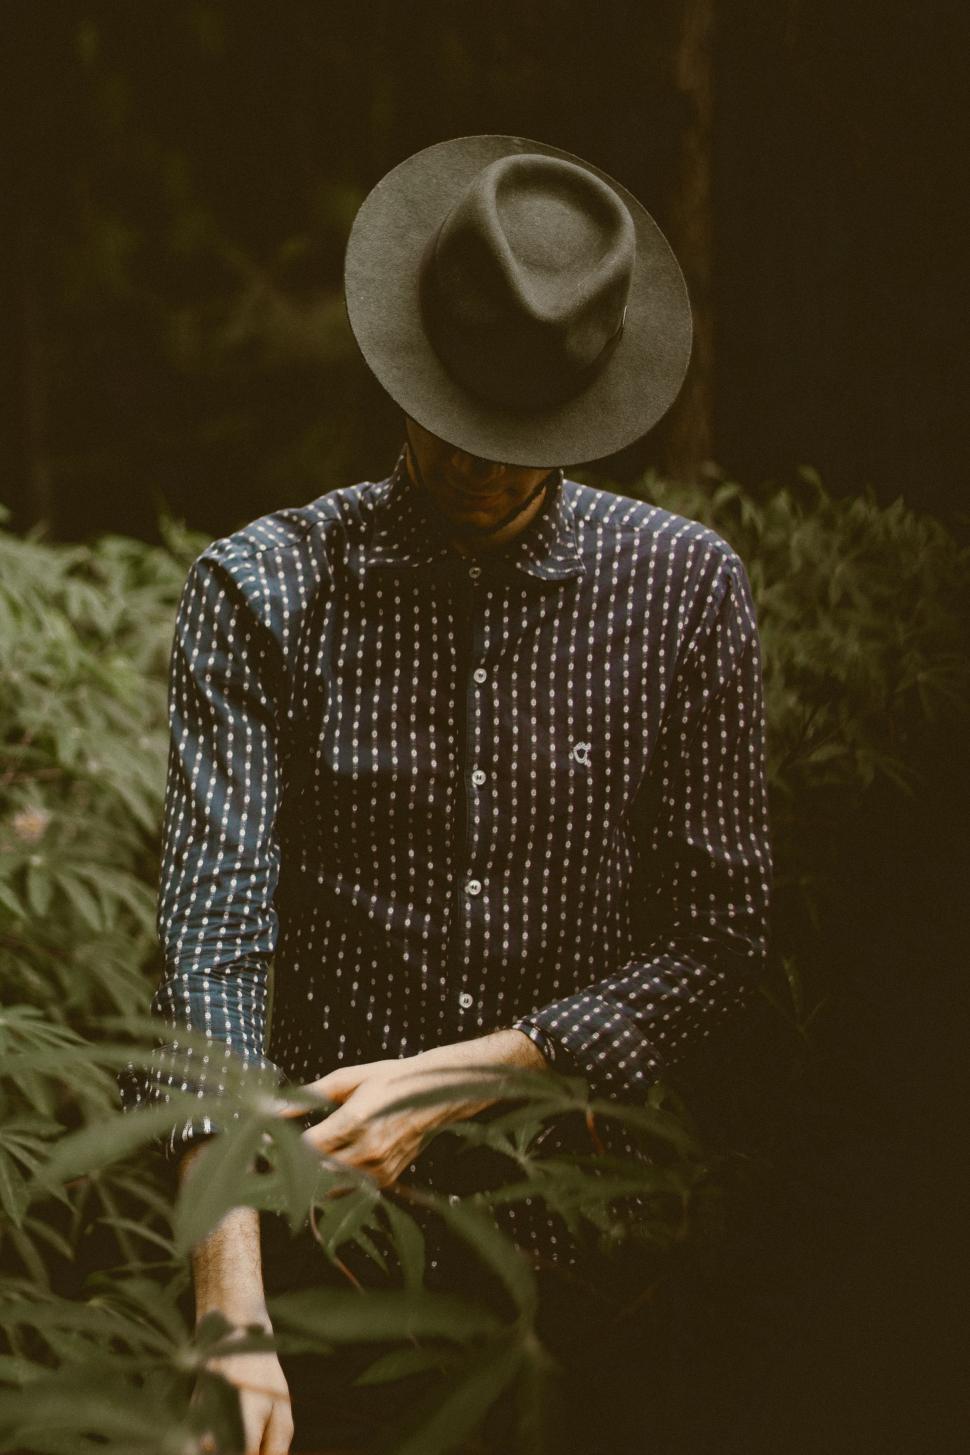 Free Image of Man Wearing Hat Standing in Field 